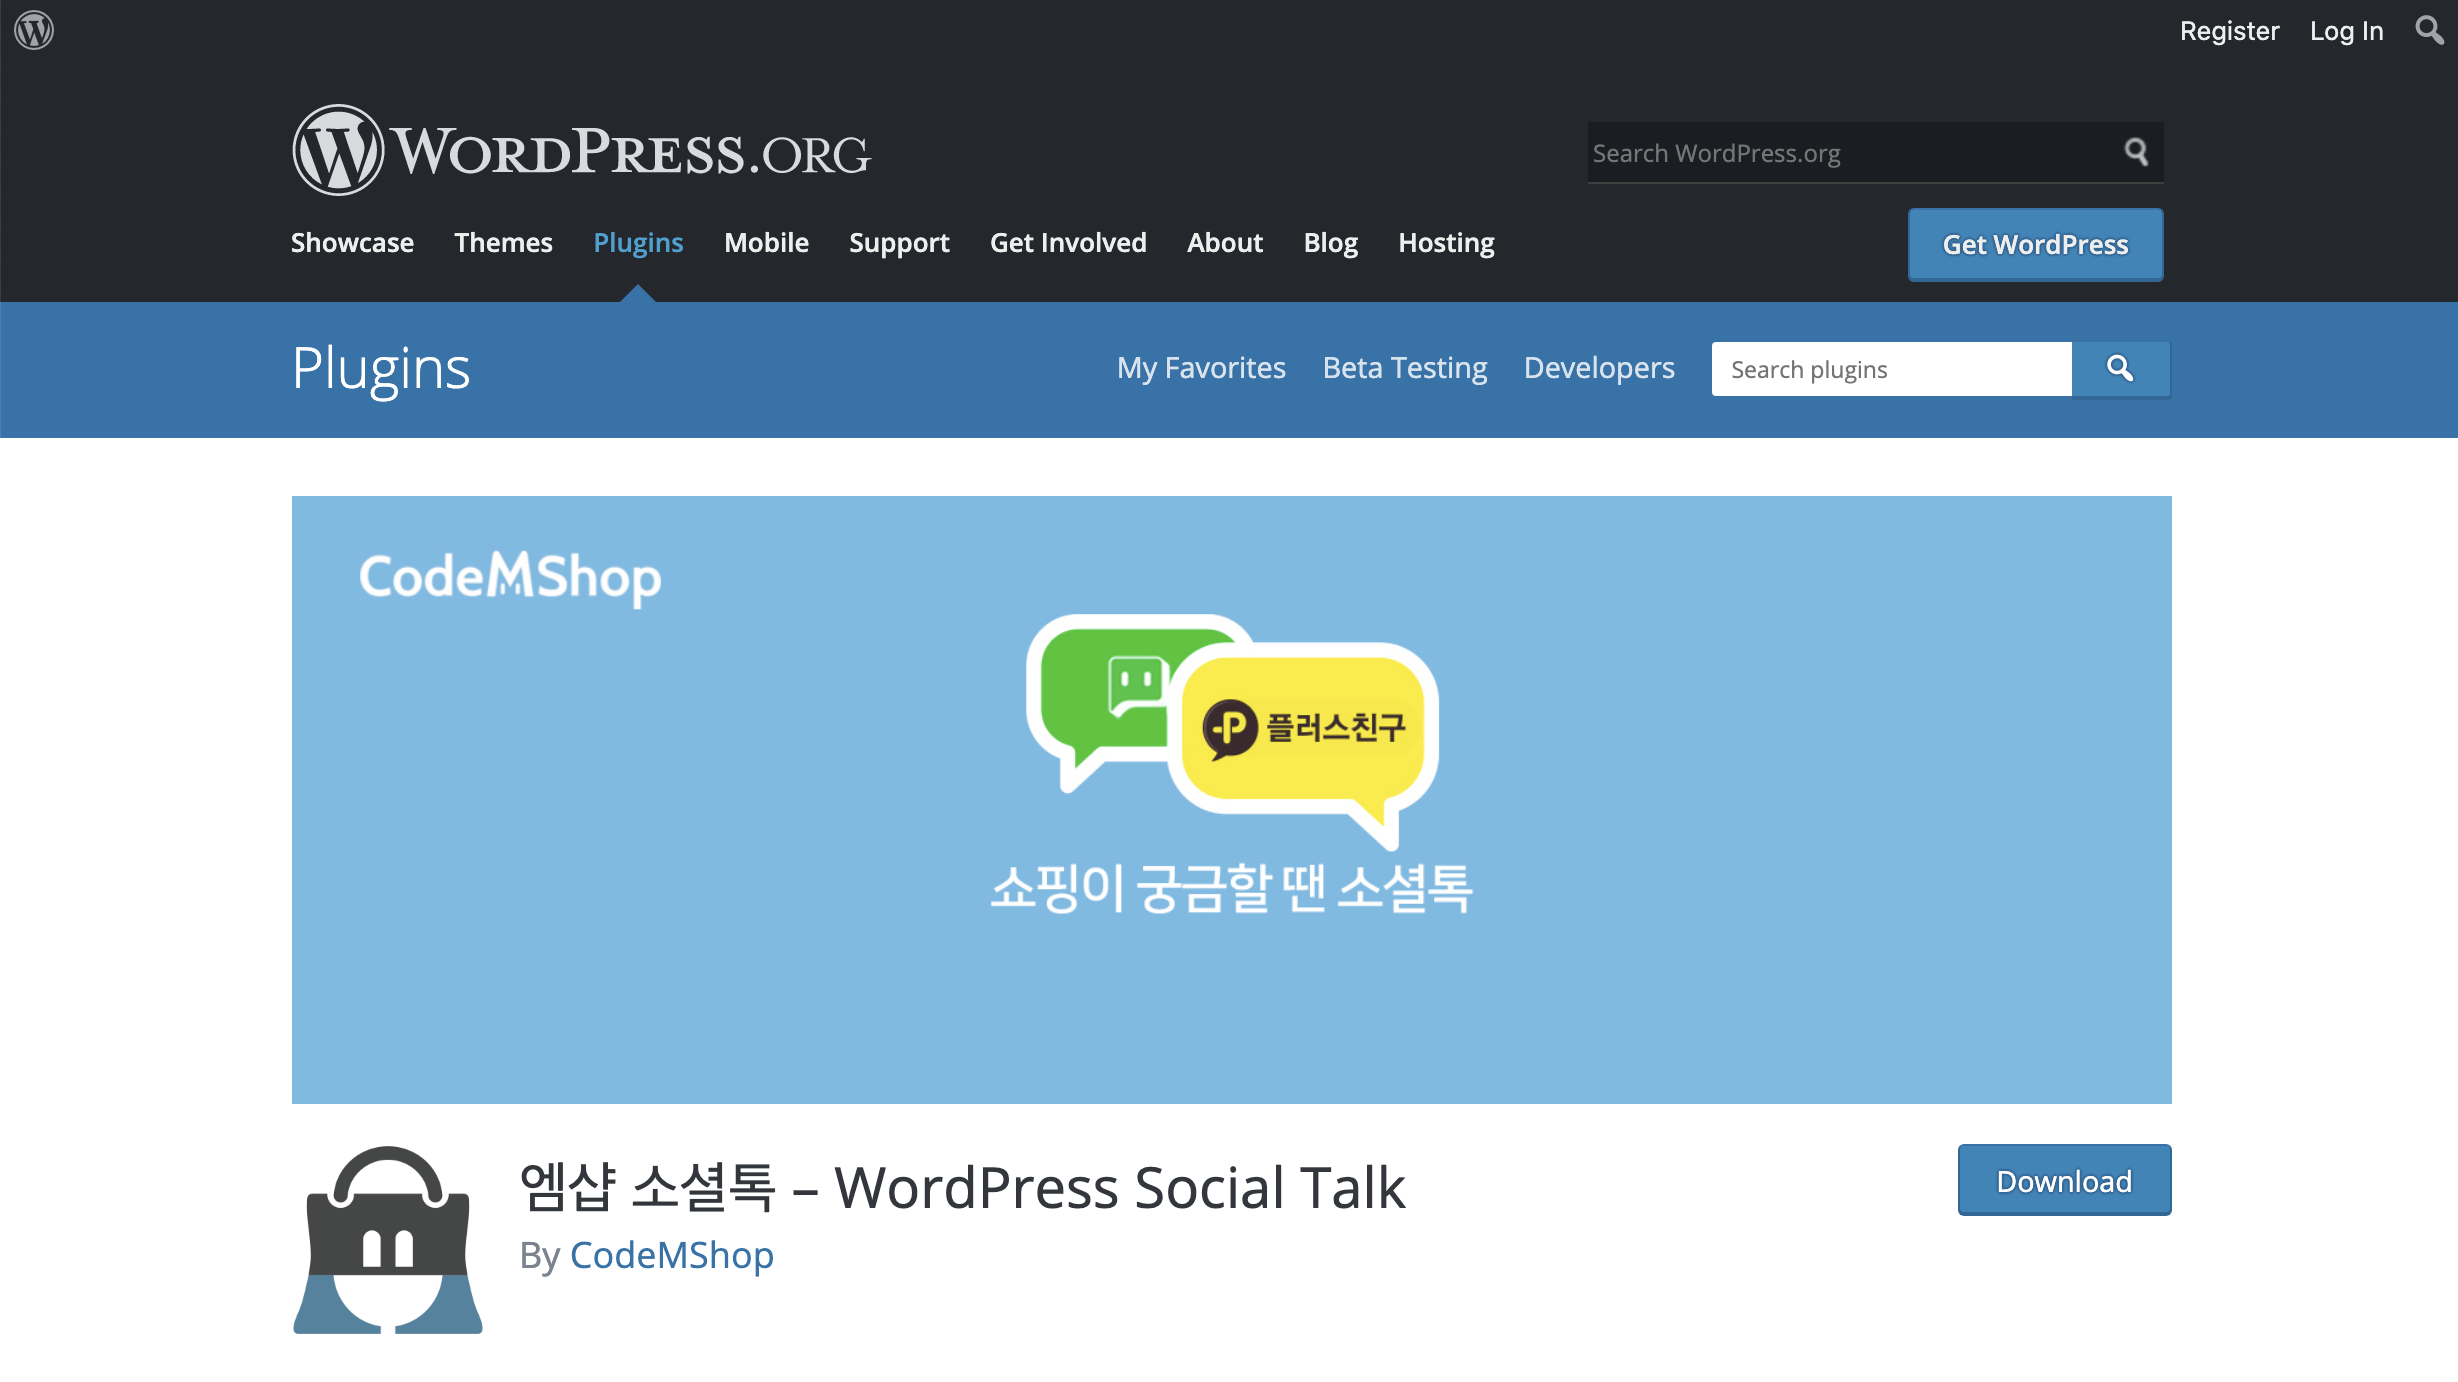 wordpress-live-chat-naver-talktalk-codemshop-7